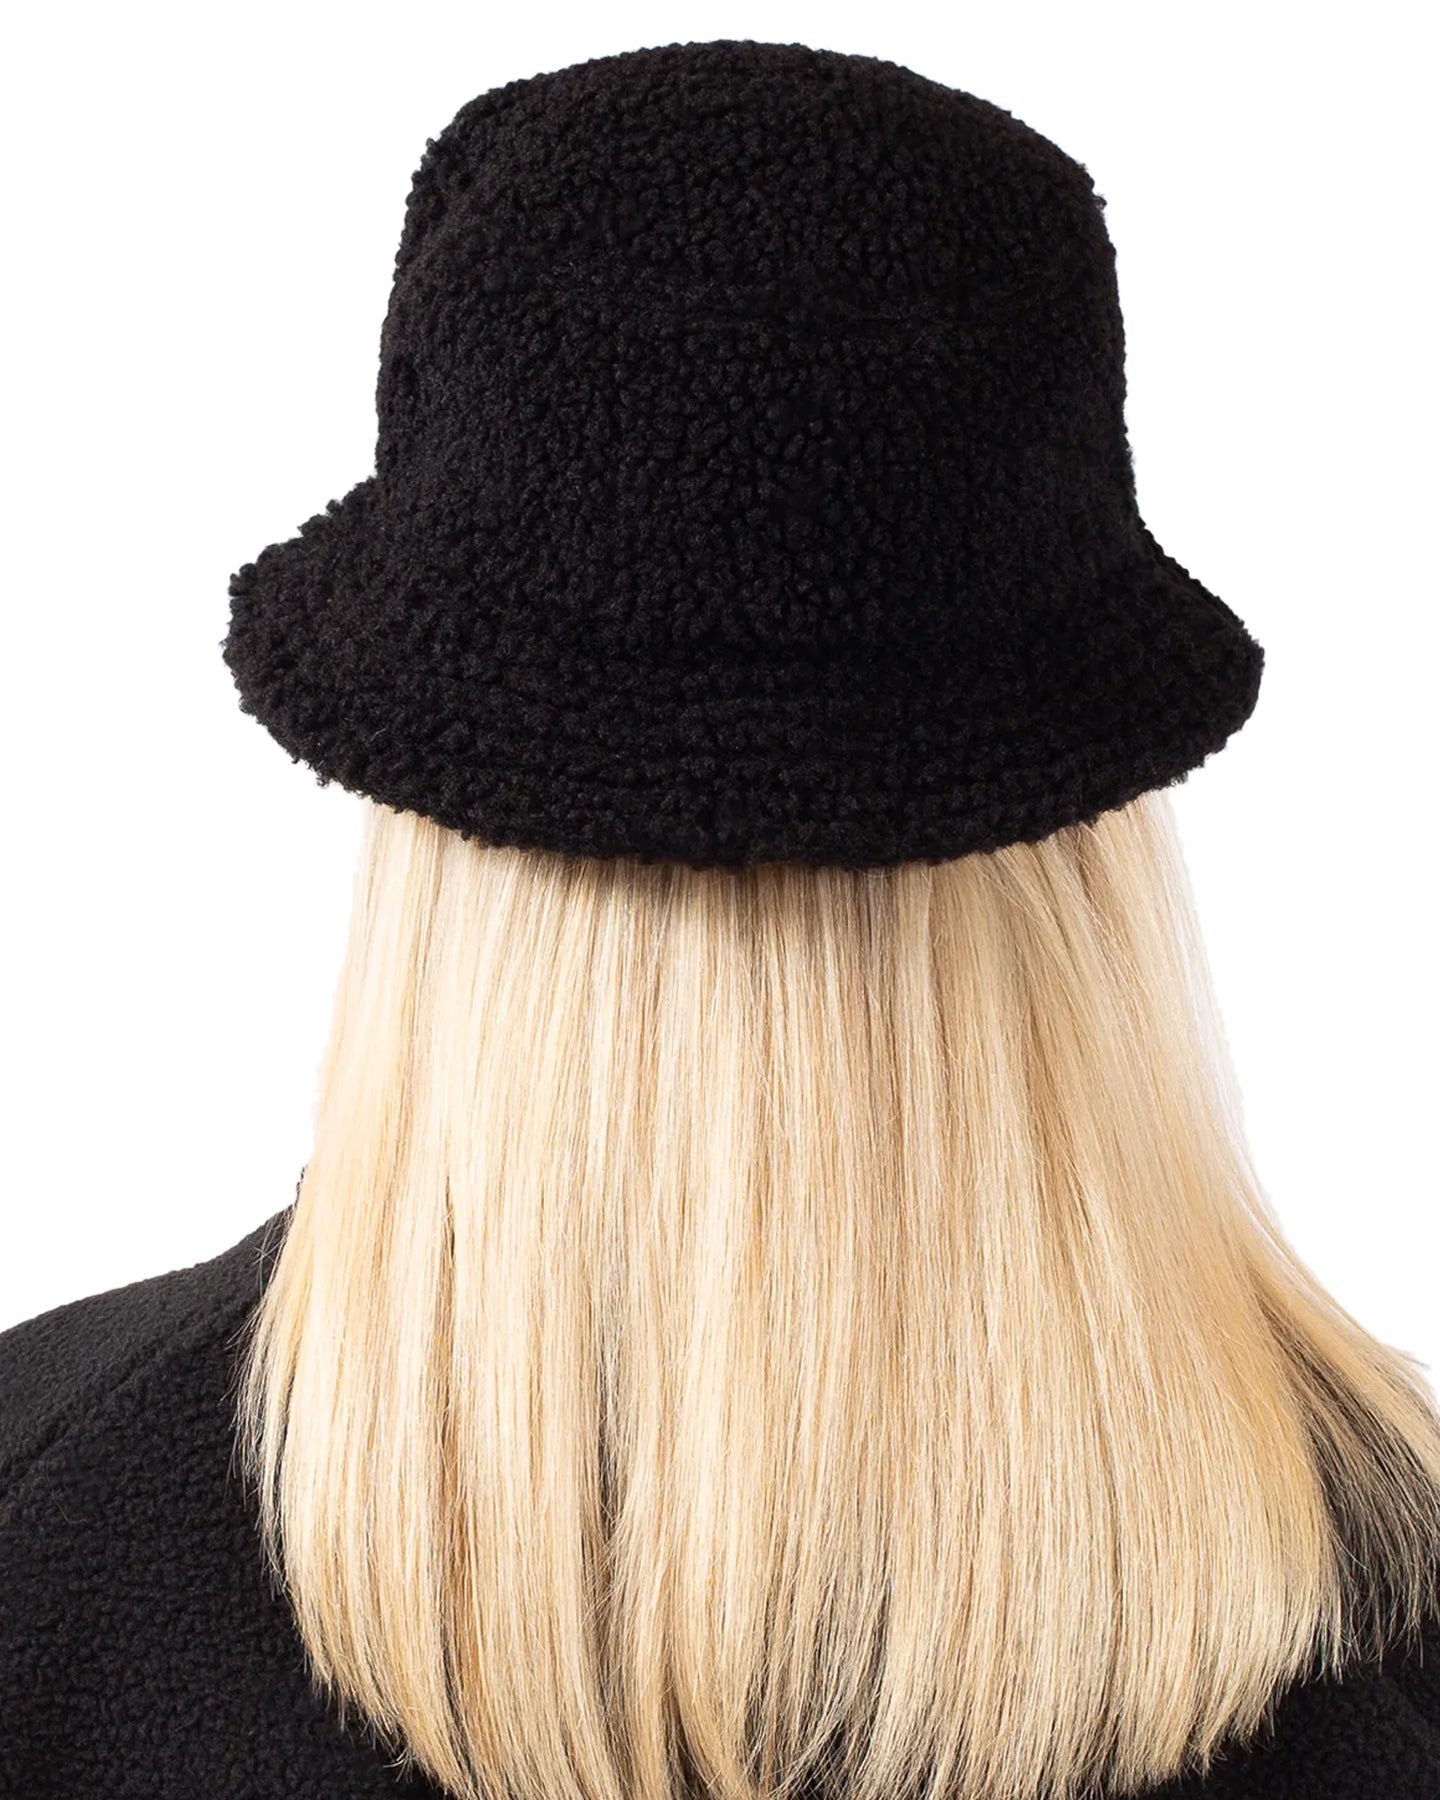 Eivy Full Moon Sherpa Women's Hat - Black Hats - SnowSkiersWarehouse